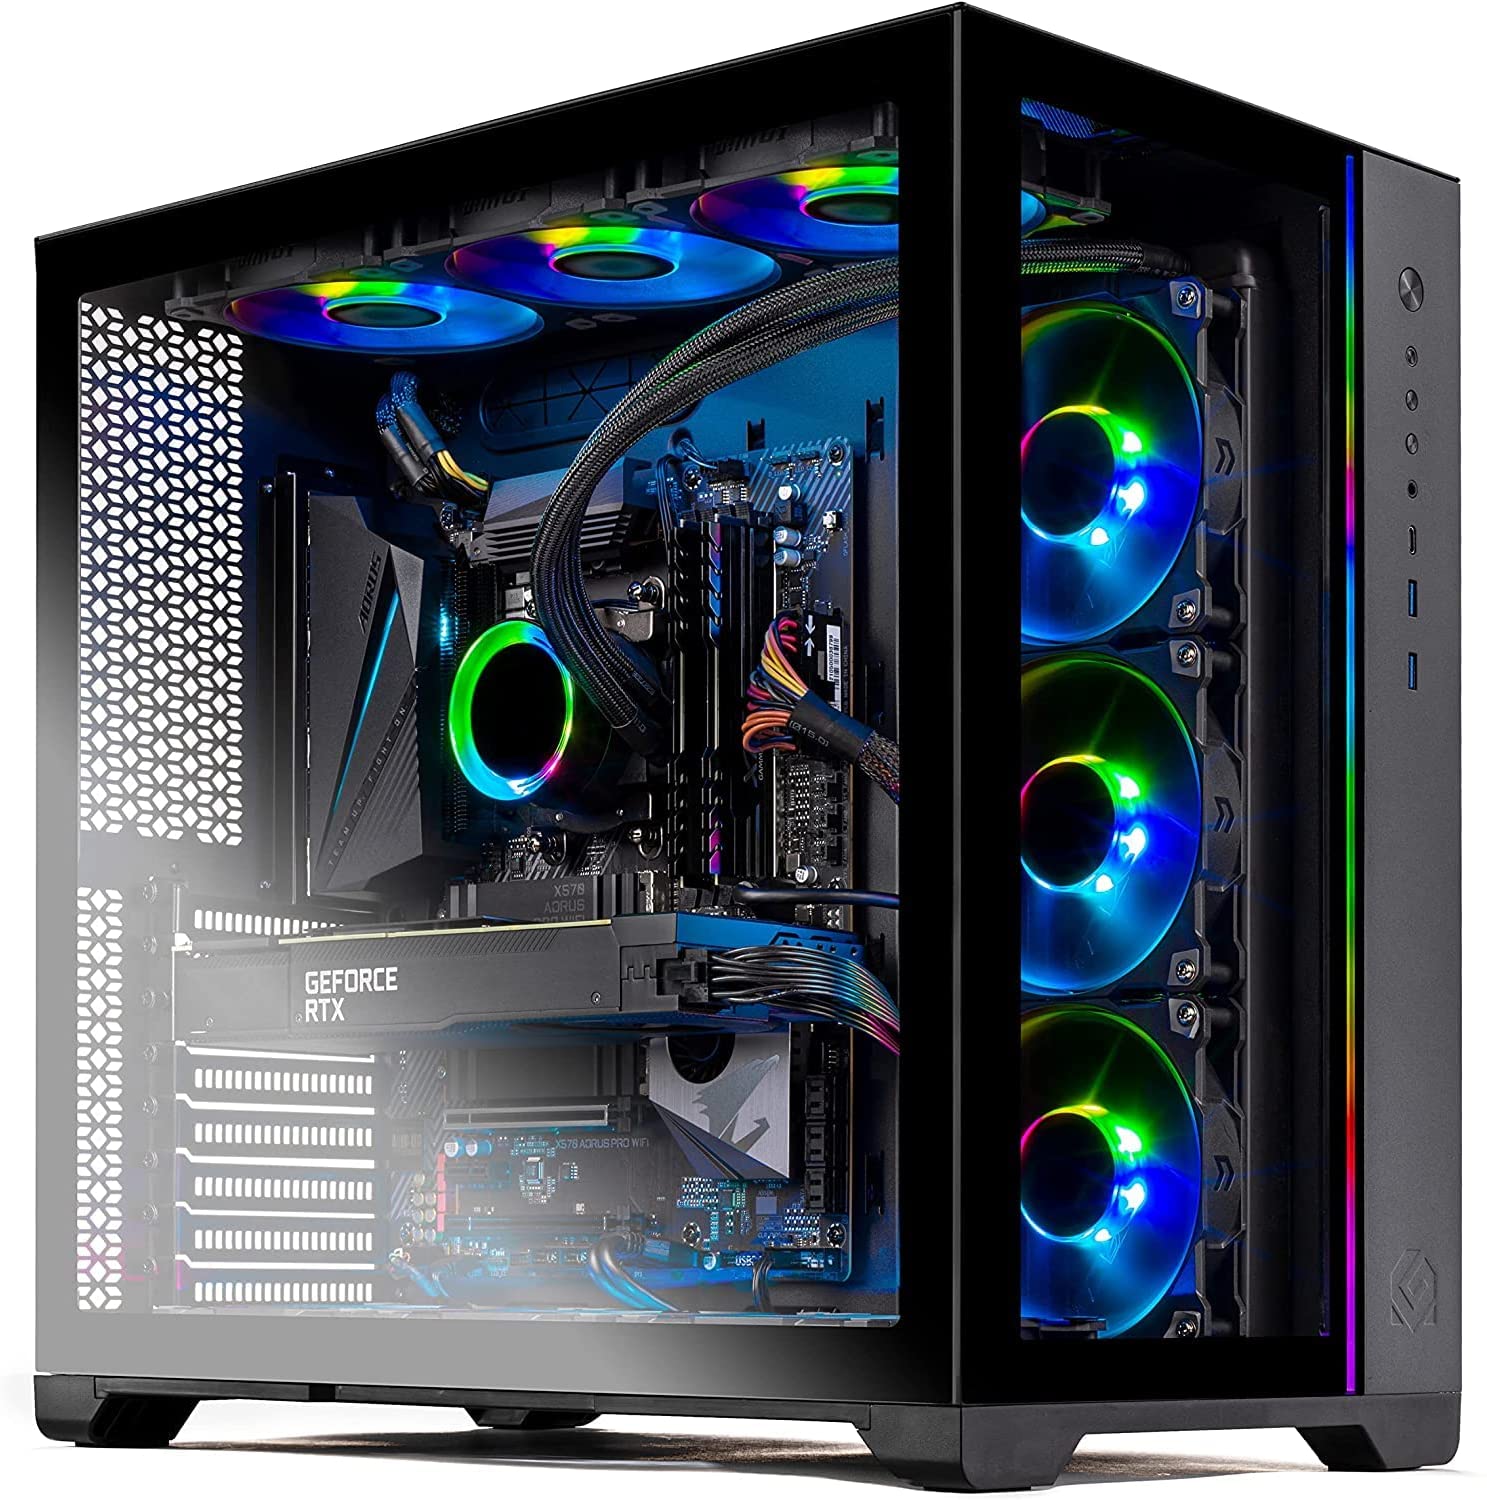 The Skytech Prism II Gaming PC Desktop – AMD Ryzen 9 5900X, 3.7 GHz